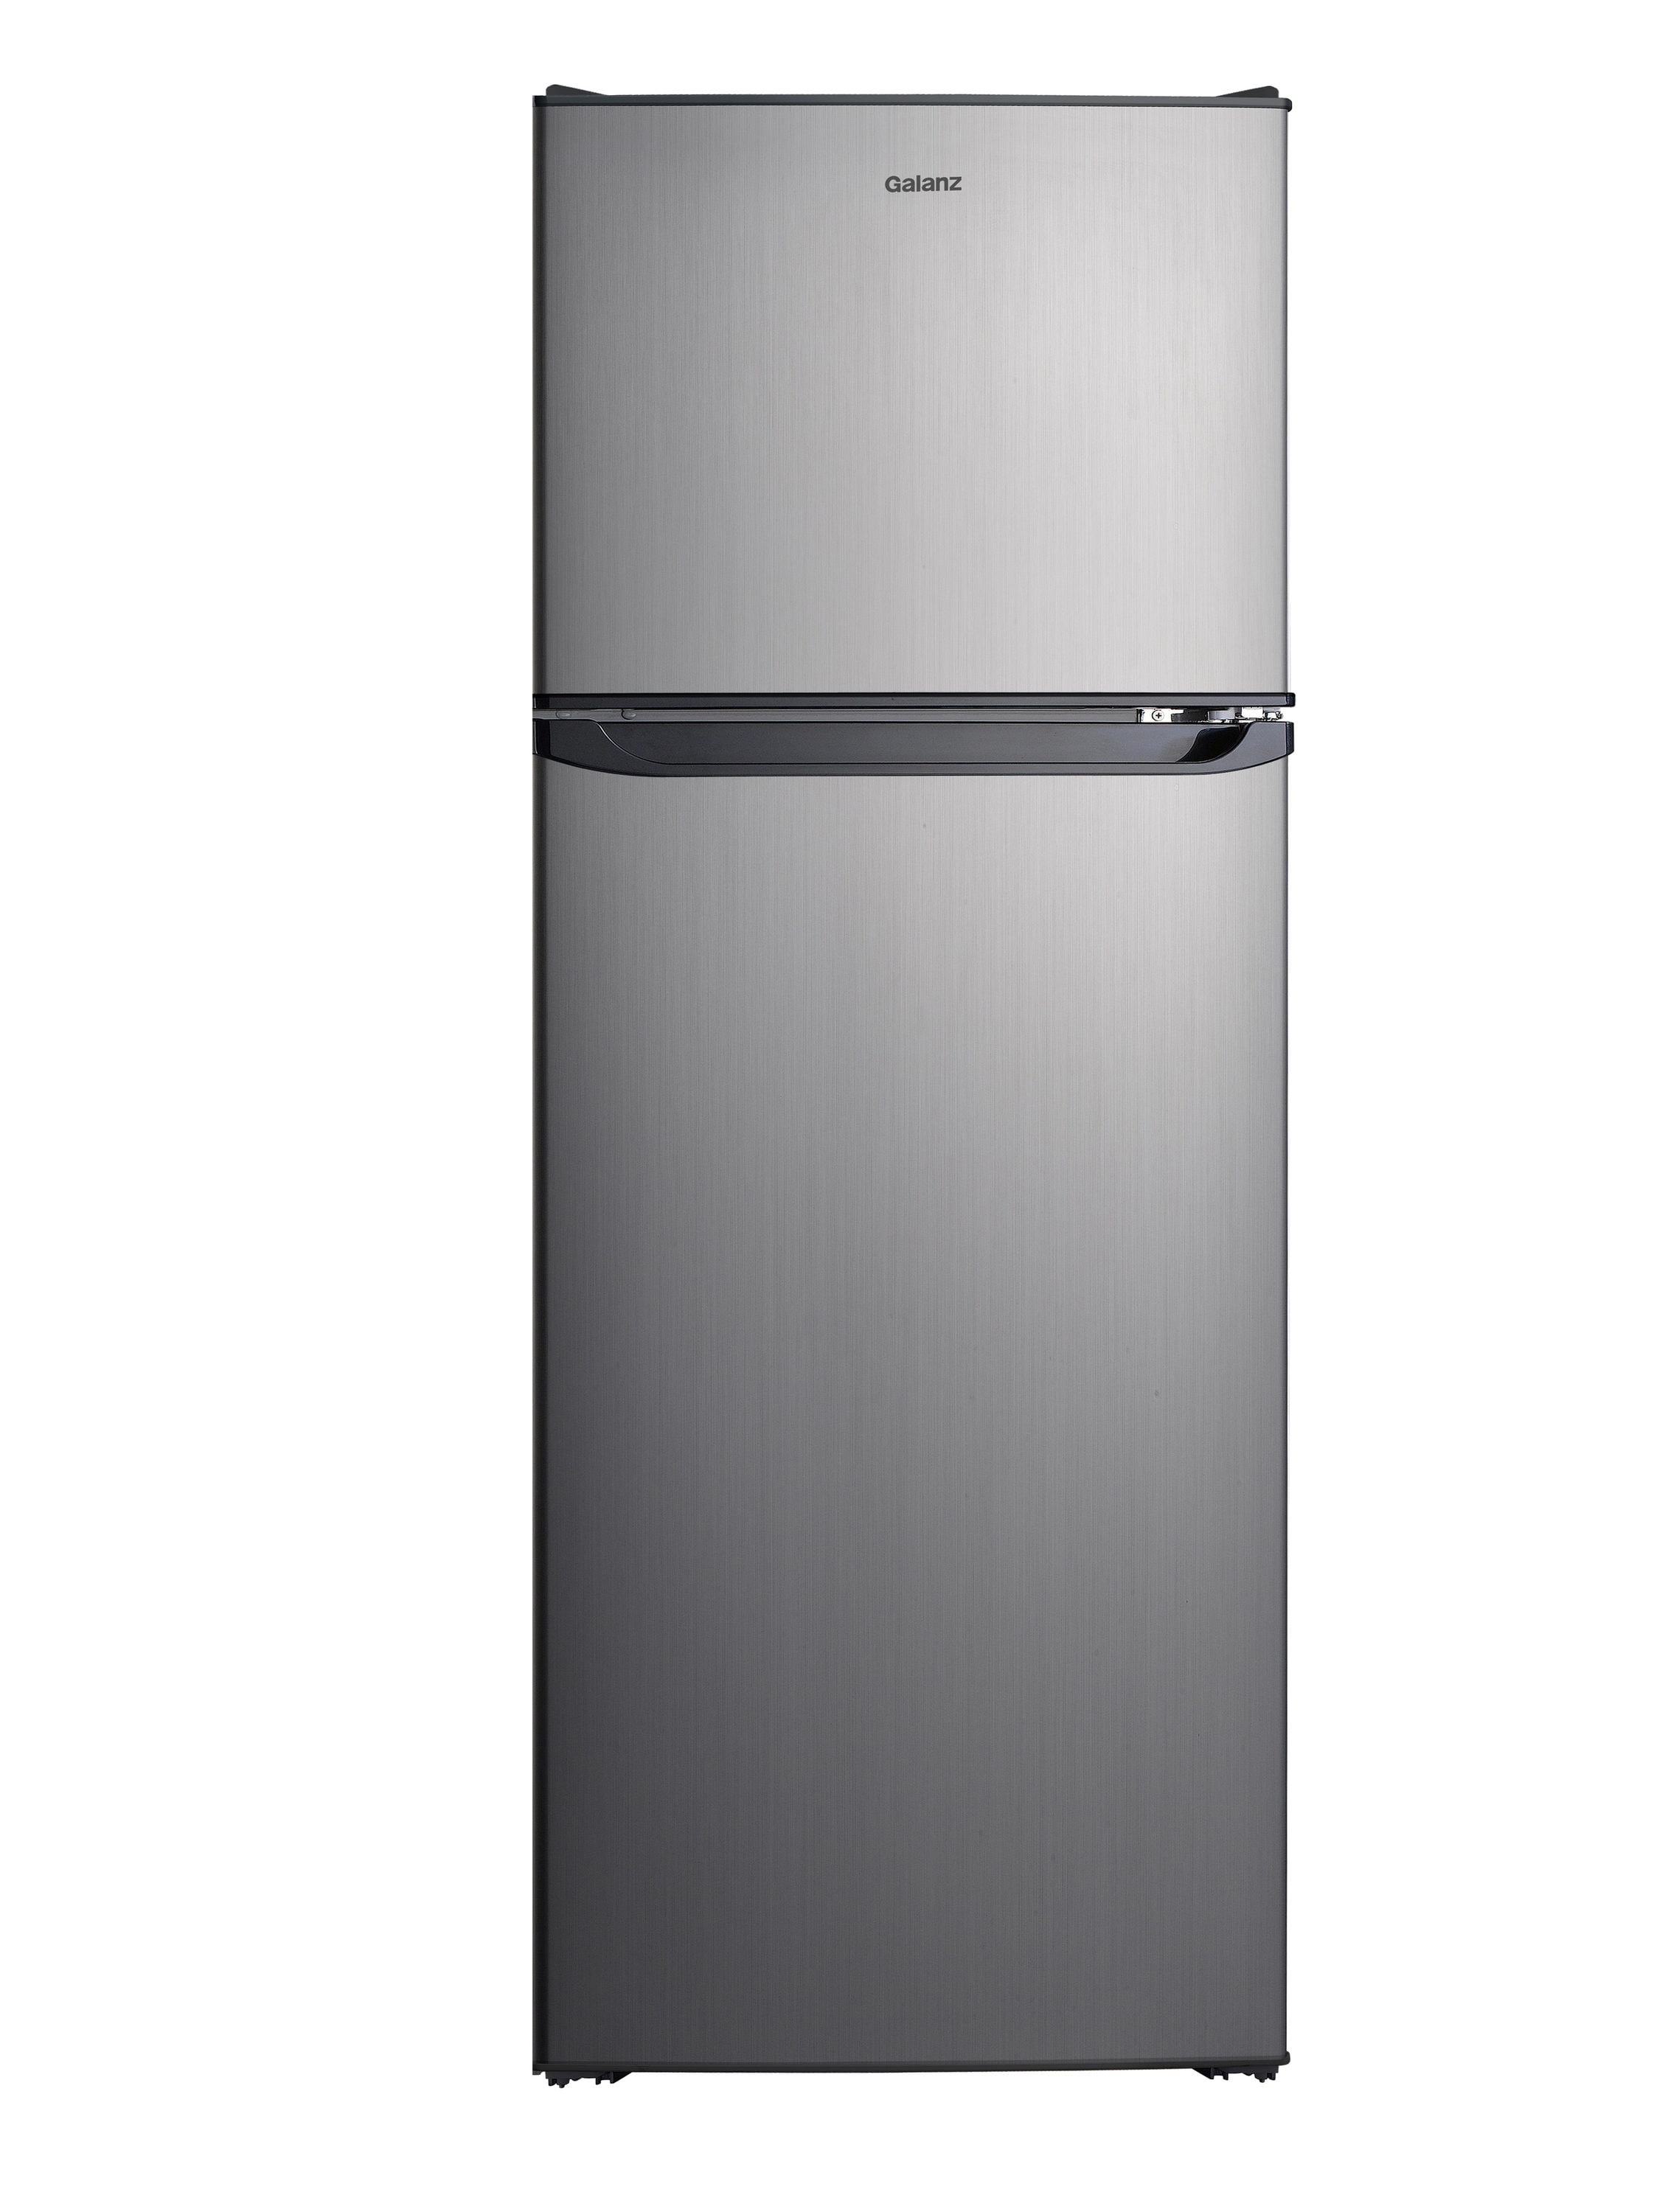 Galanz Retro 10-cu ft Counter-depth Top-Freezer Refrigerator (Vinyl Black)  ENERGY STAR in the Top-Freezer Refrigerators department at